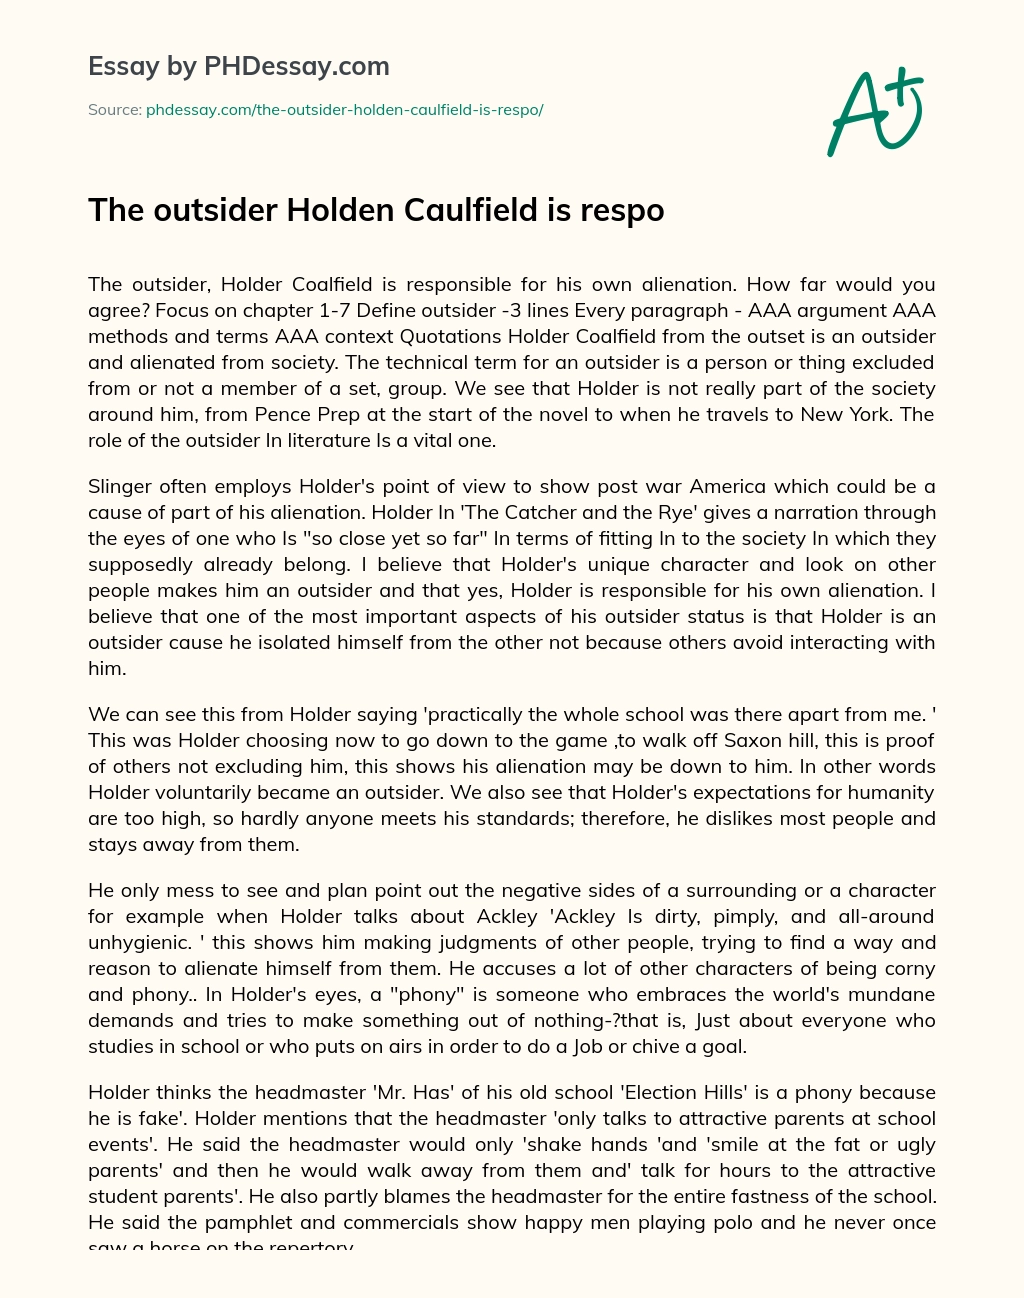 The outsider Holden Caulfield is respo essay